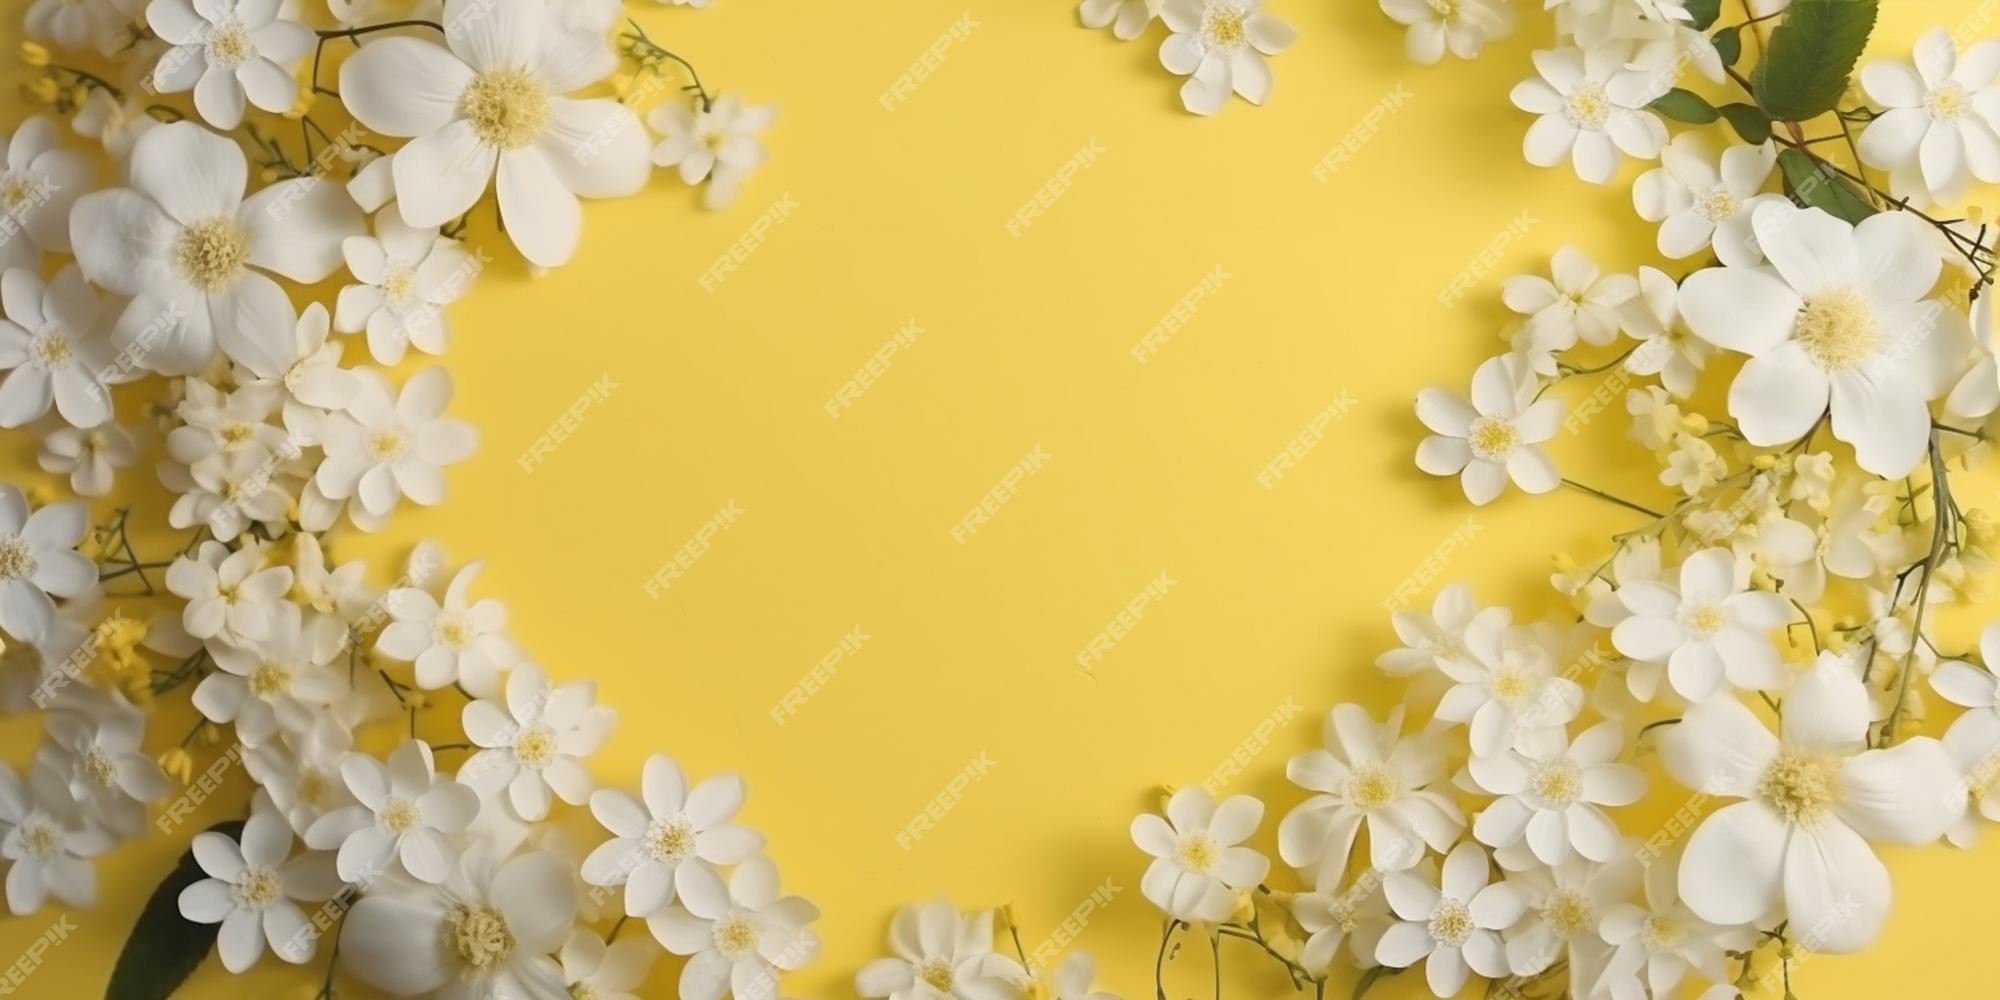 Yellow Spring Background Images - Free Download on Freepik